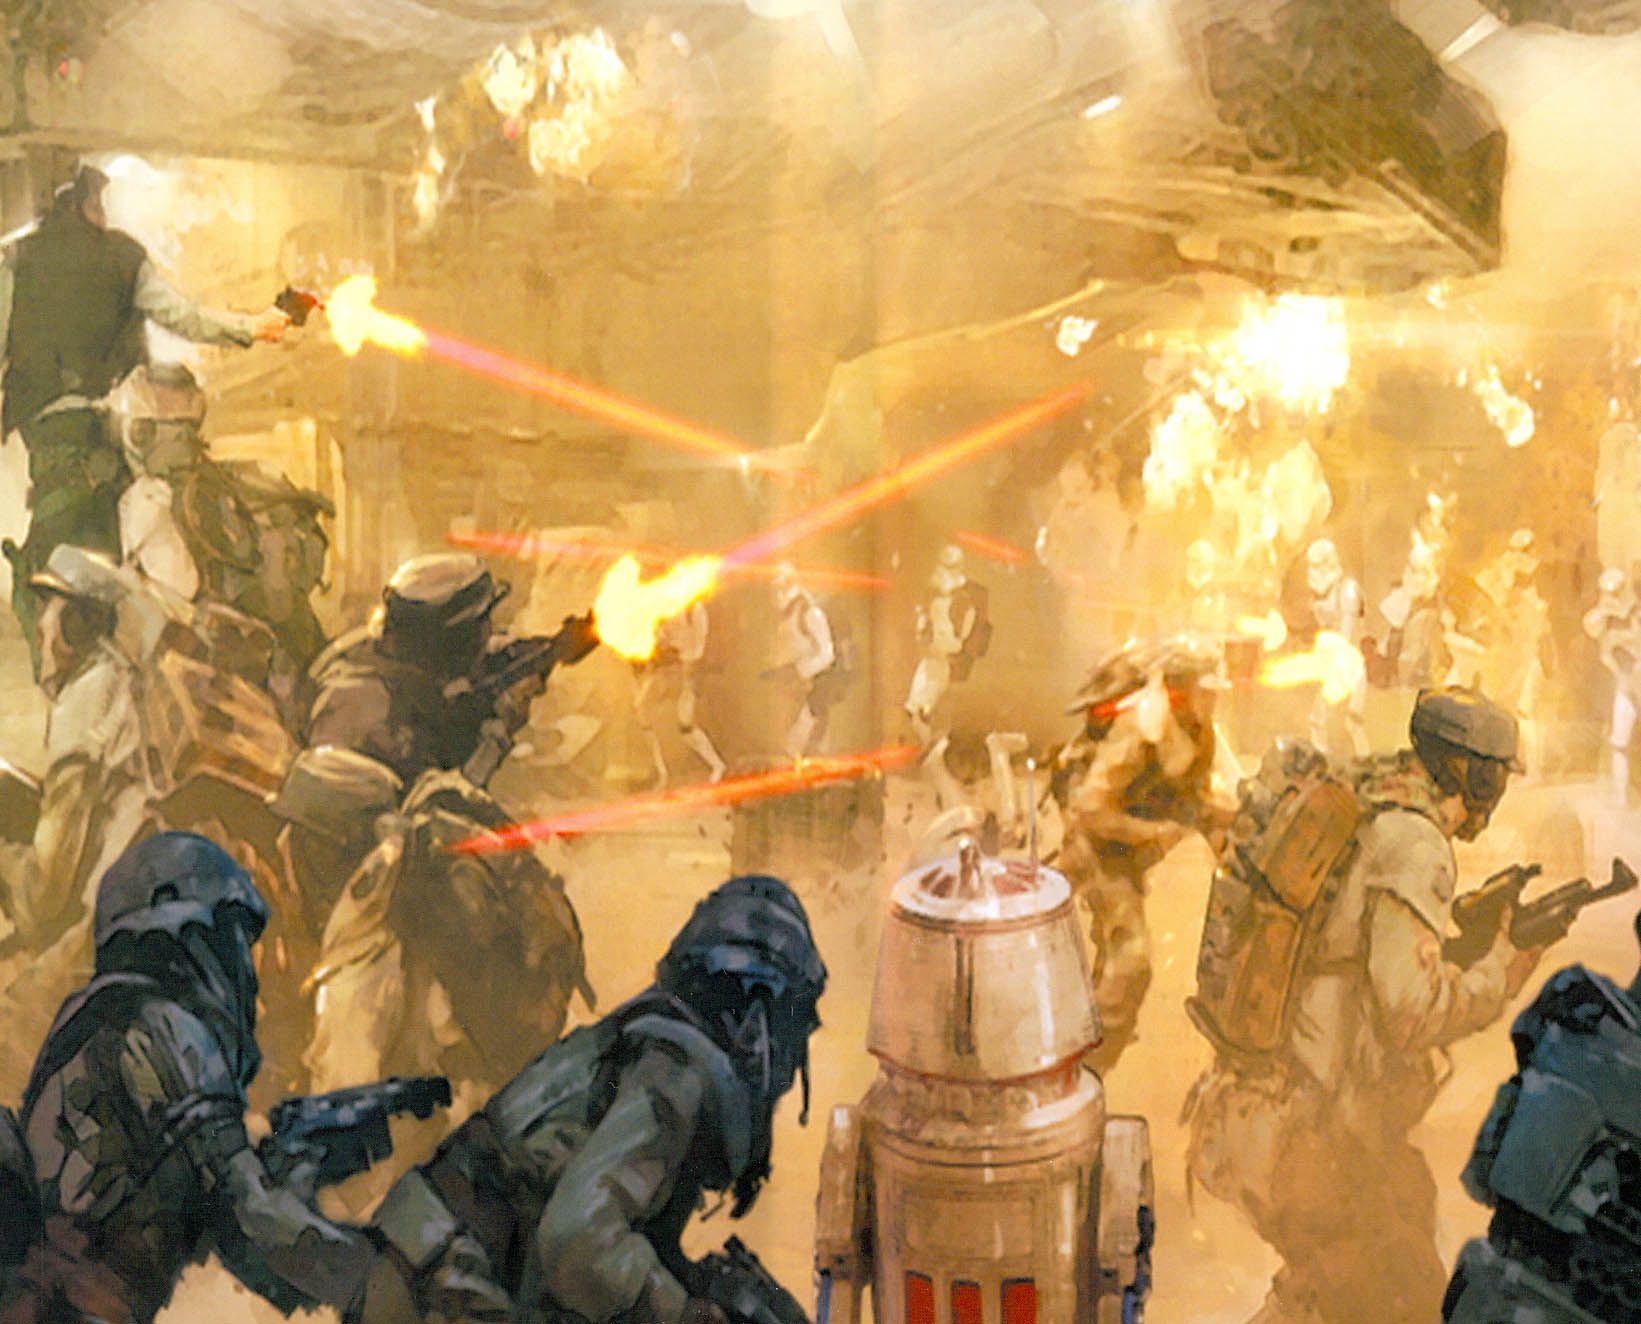 Star Wars Battlefront: Renegade Squadron. Star wars art, Star wars artwork, Star wars poster